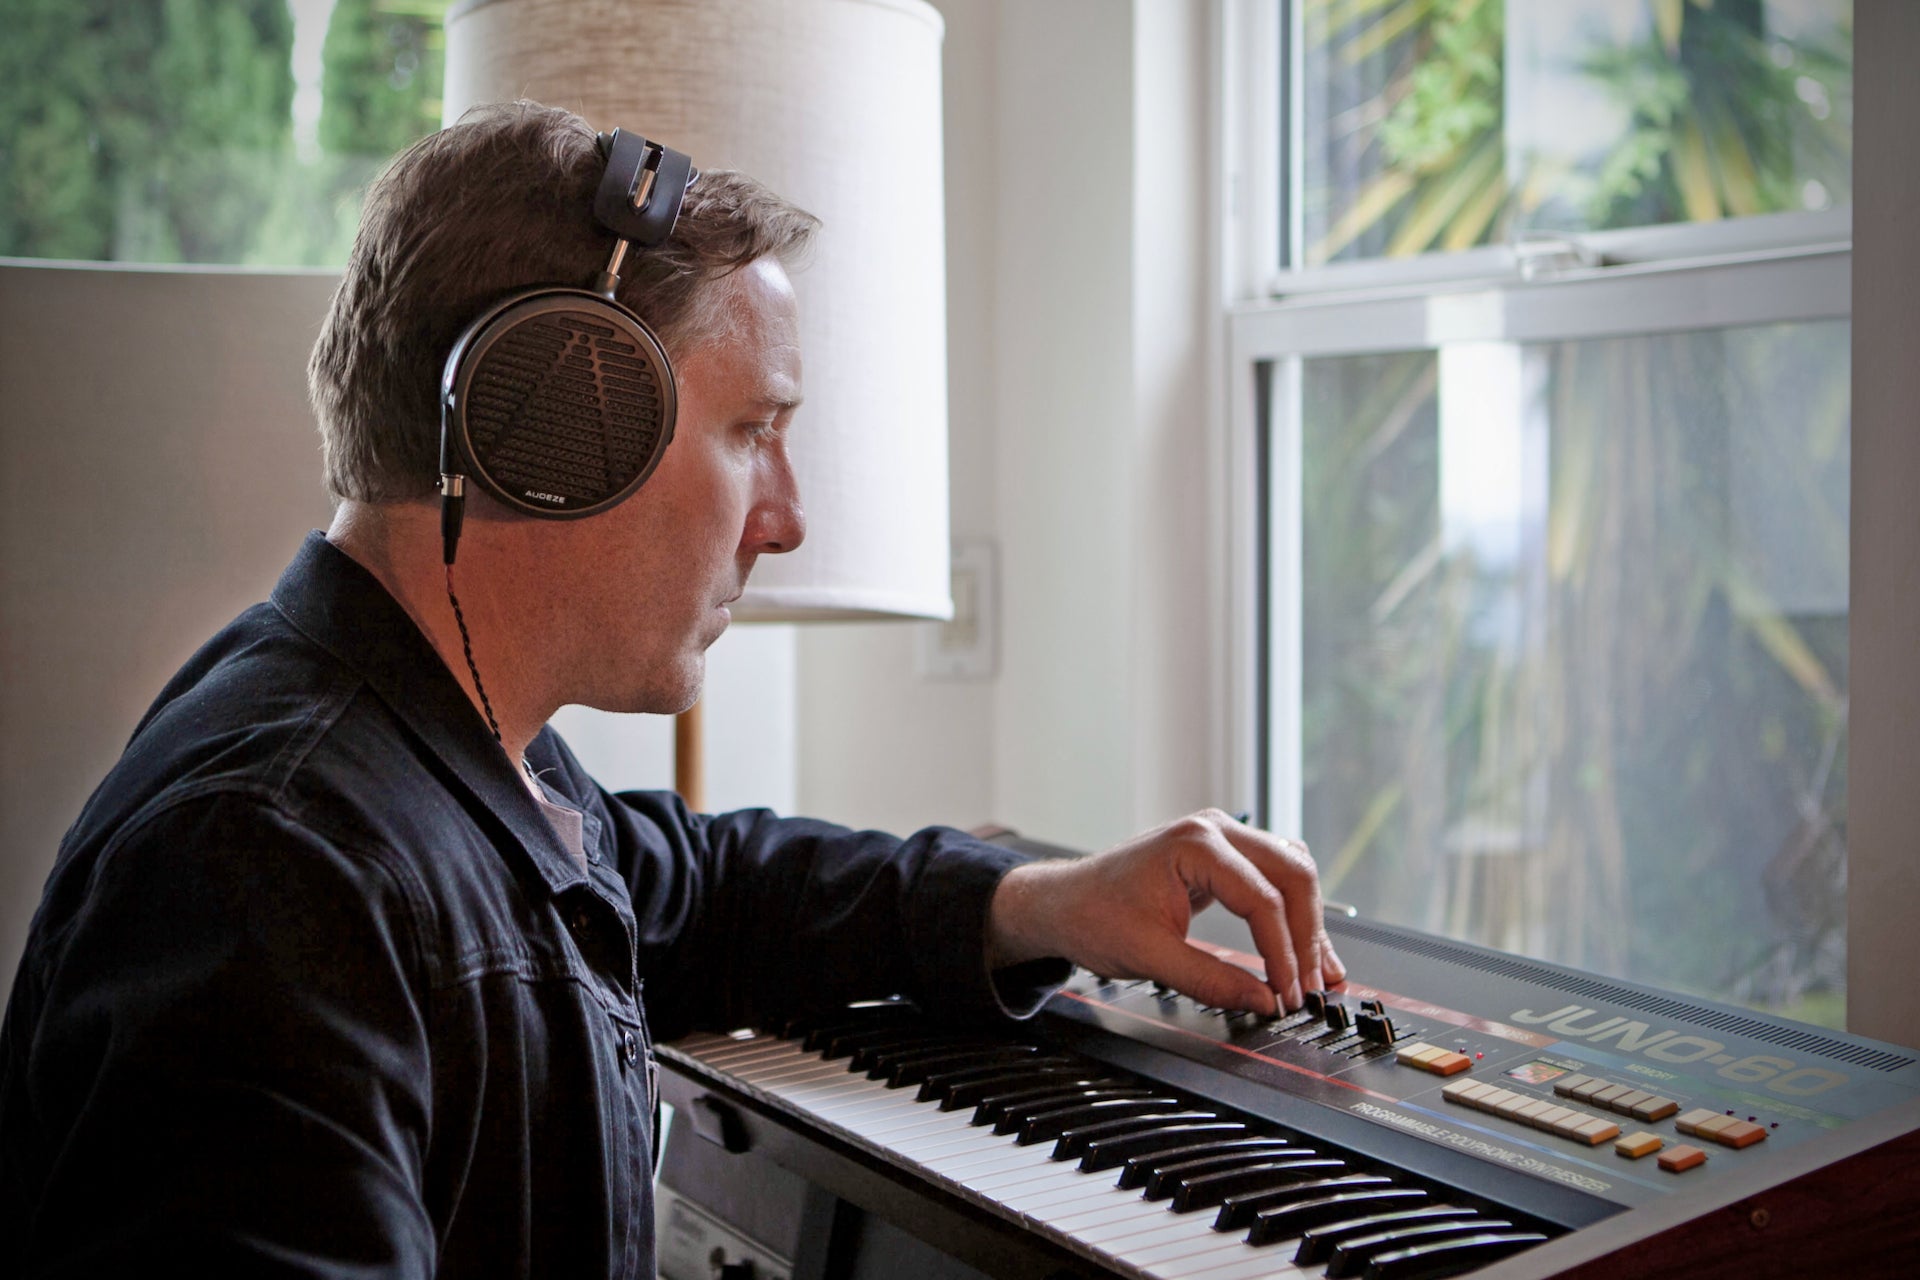 Michael A. Muller in the studio with his Audeze MM-500 headphones